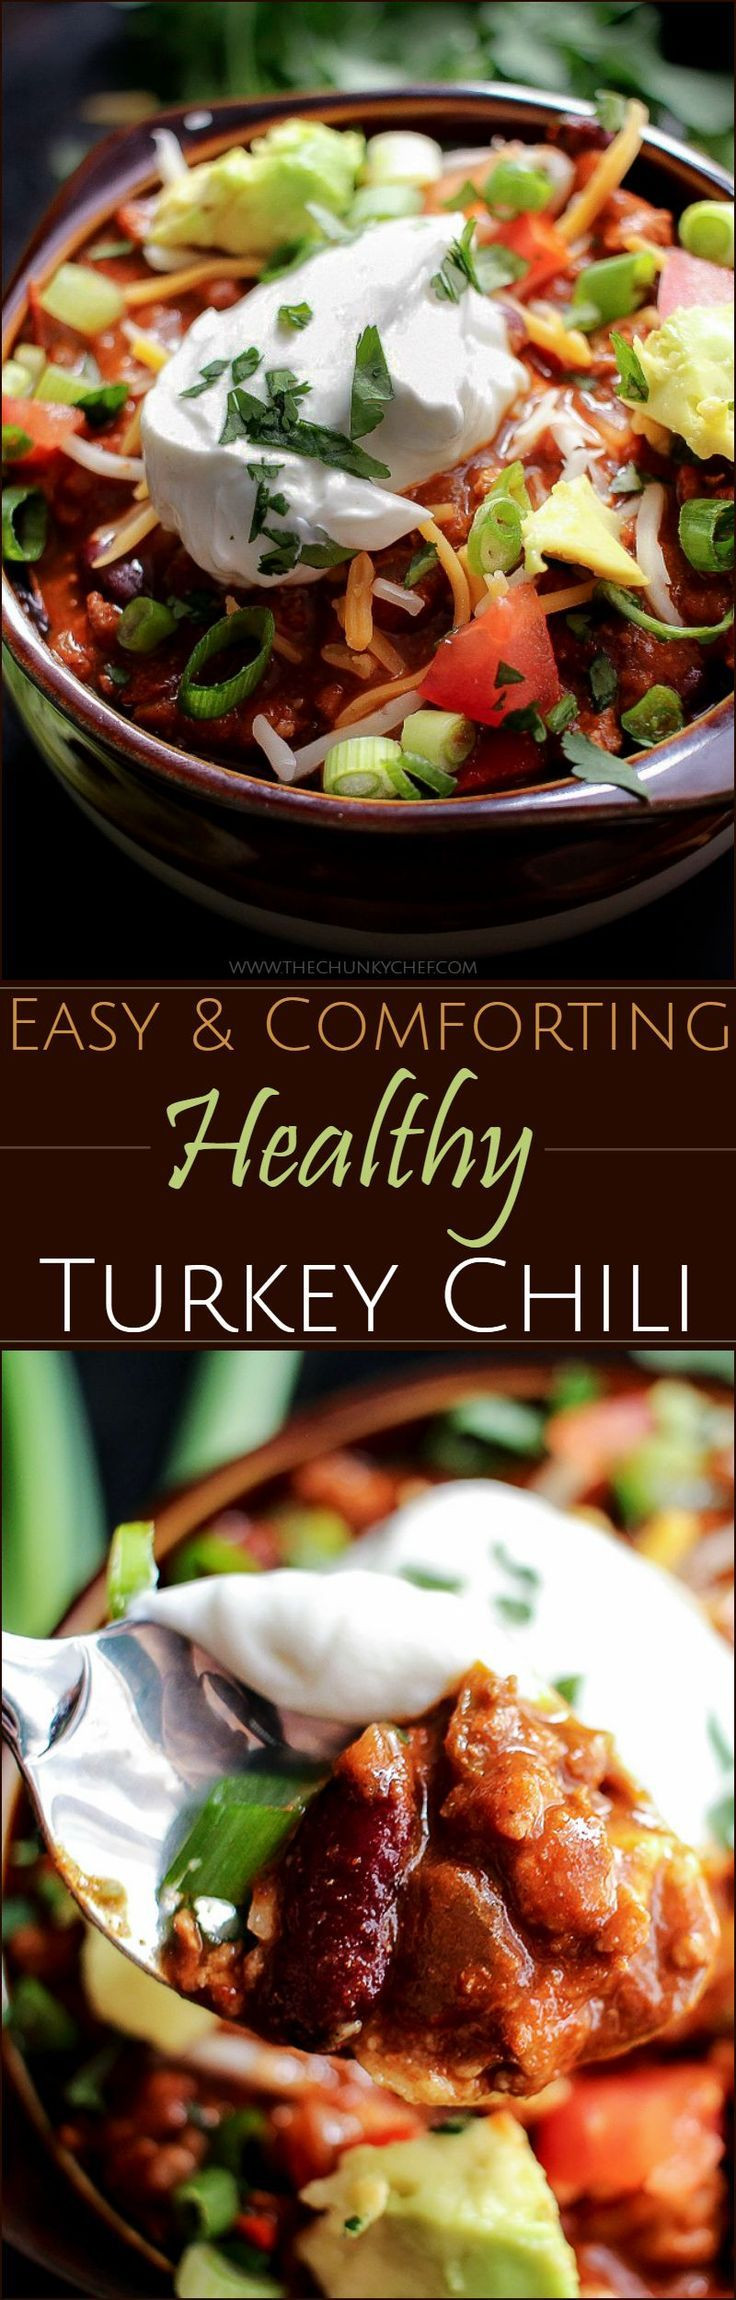 Heart Healthy Thanksgiving Recipes
 Best 25 Healthy turkey chili ideas on Pinterest